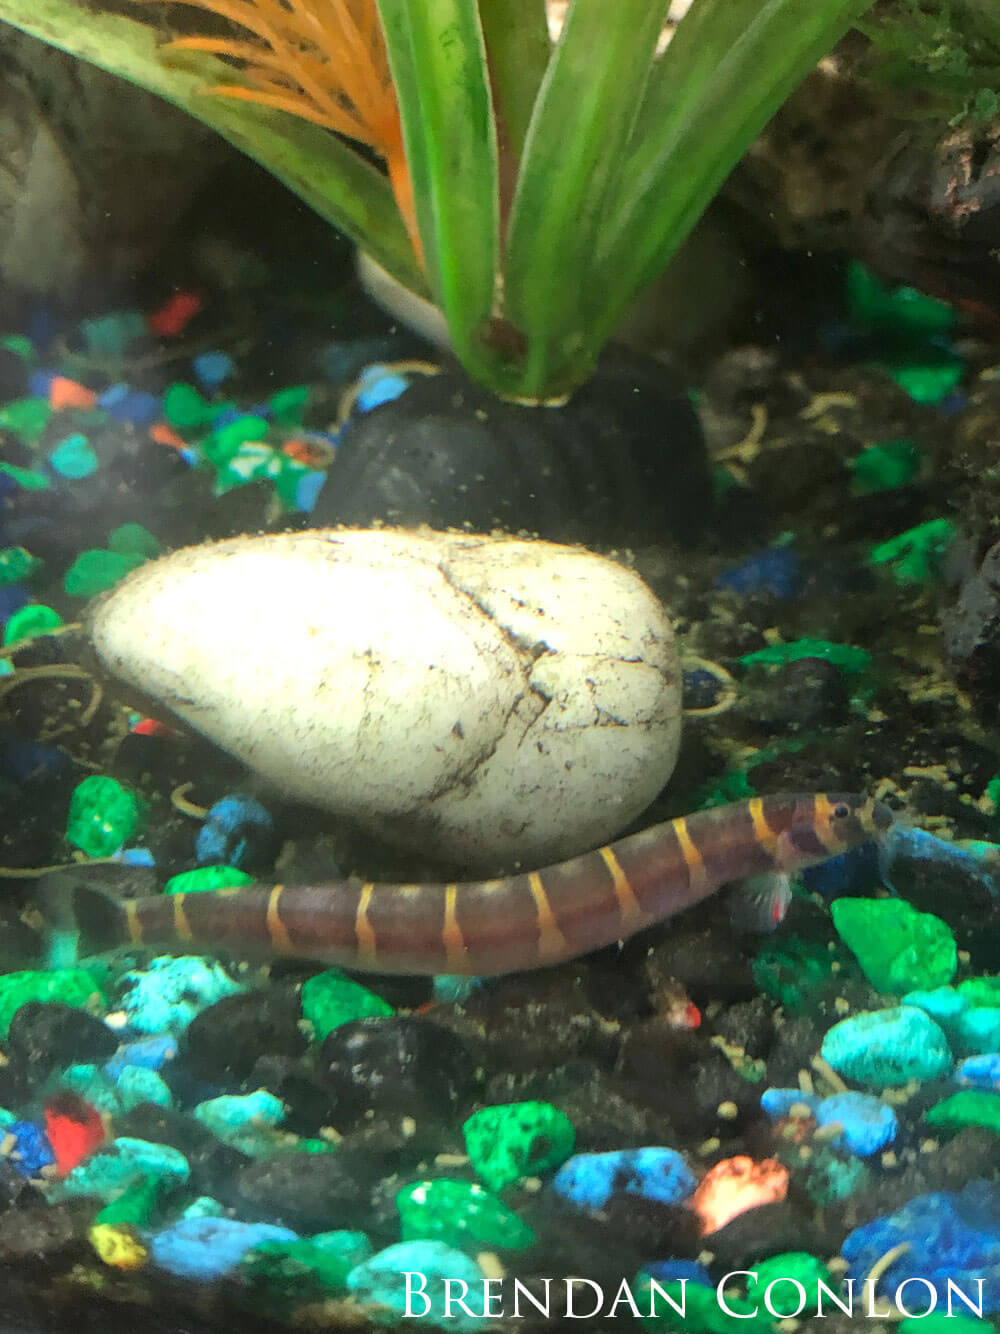 Small eel-like freshwater fish in tank.